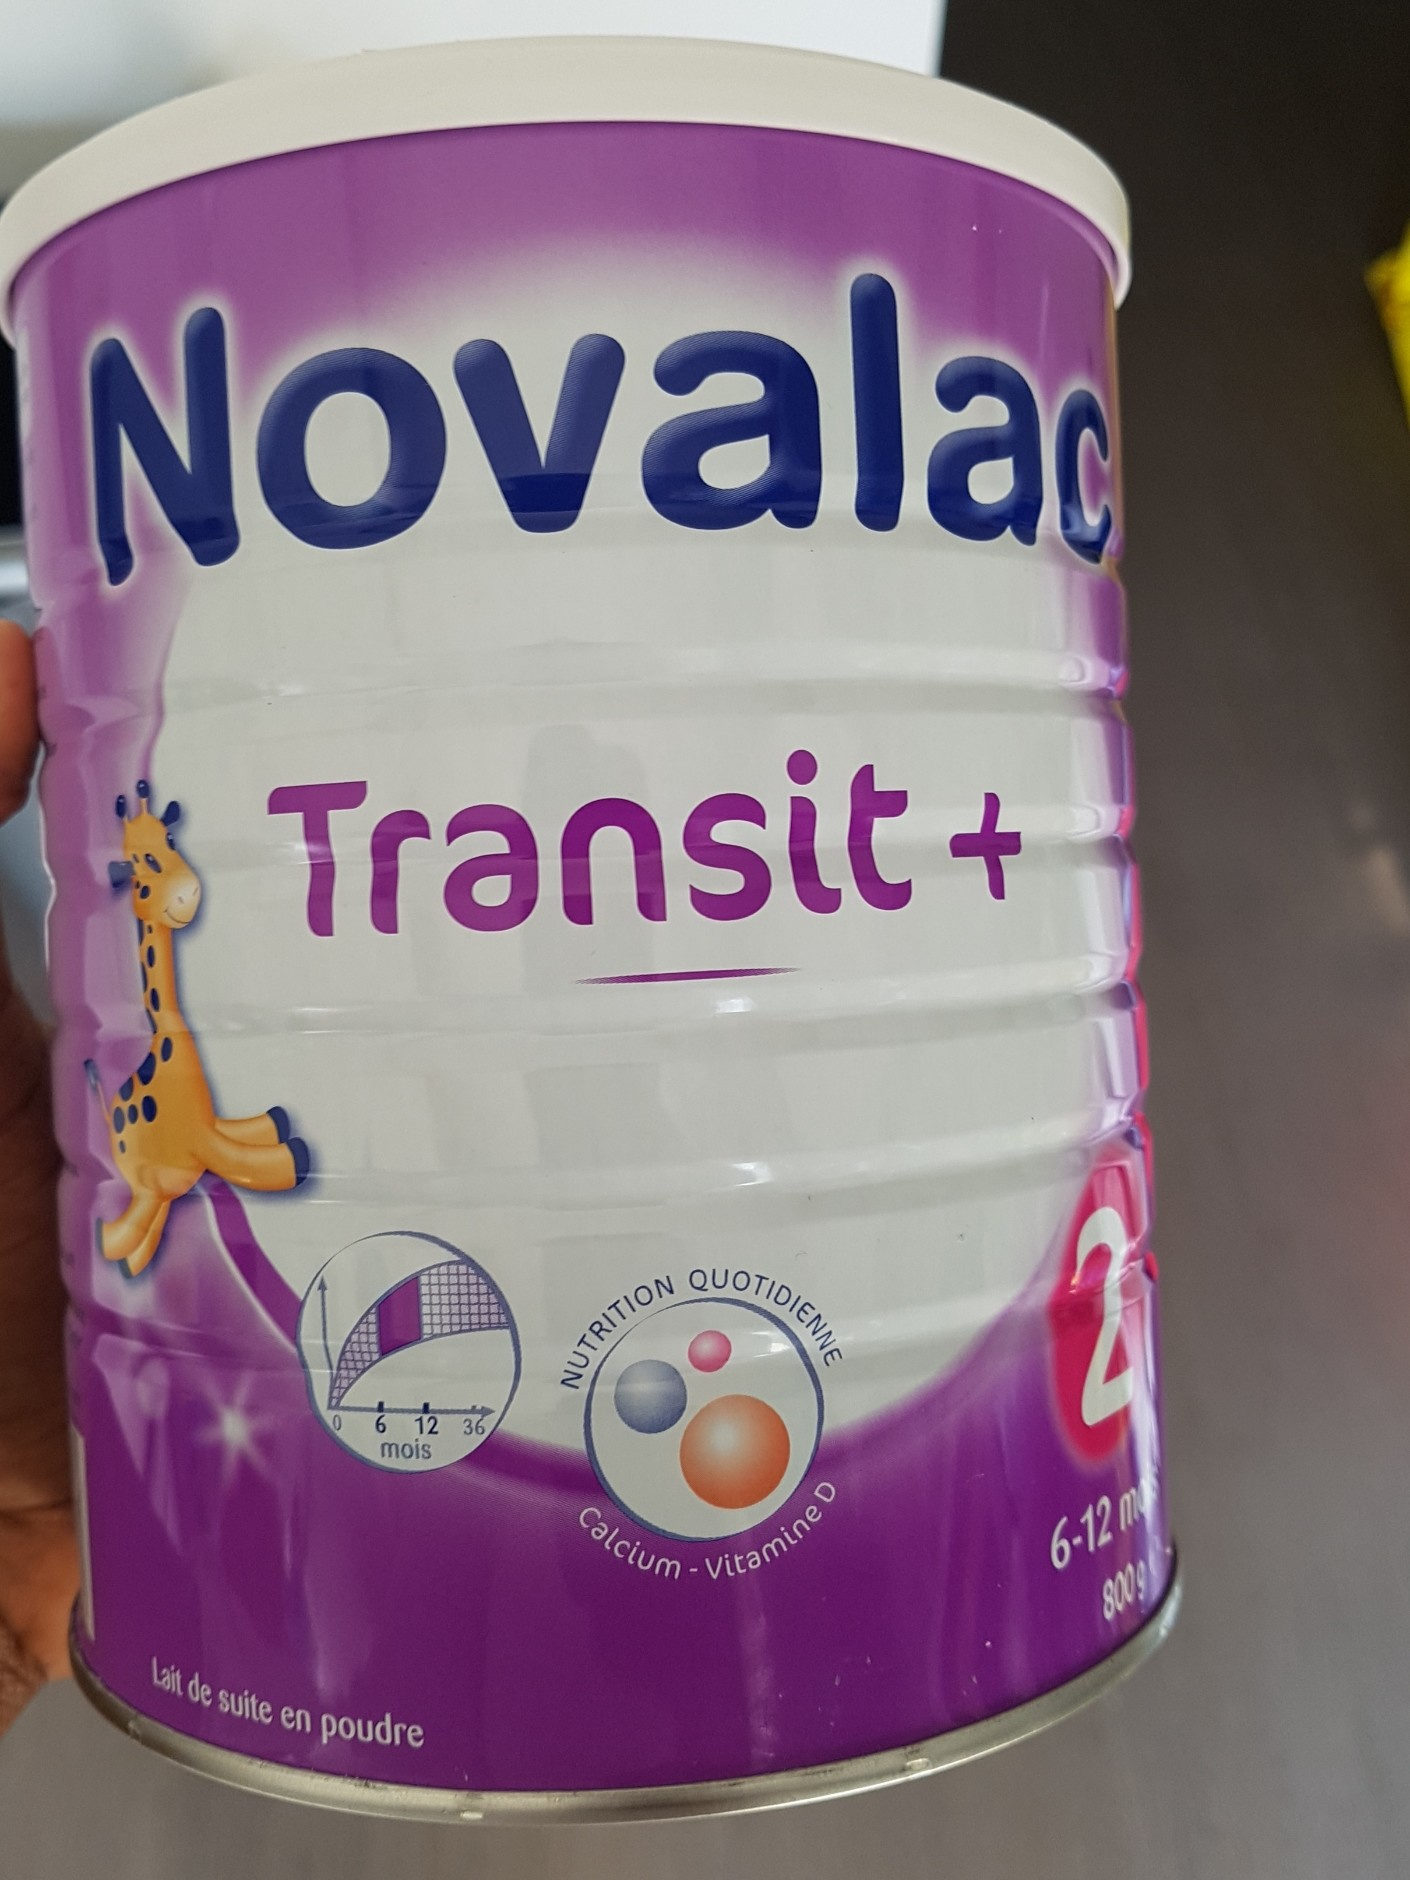 Novalac Transit+ 2AGE Lait - Producto - fr